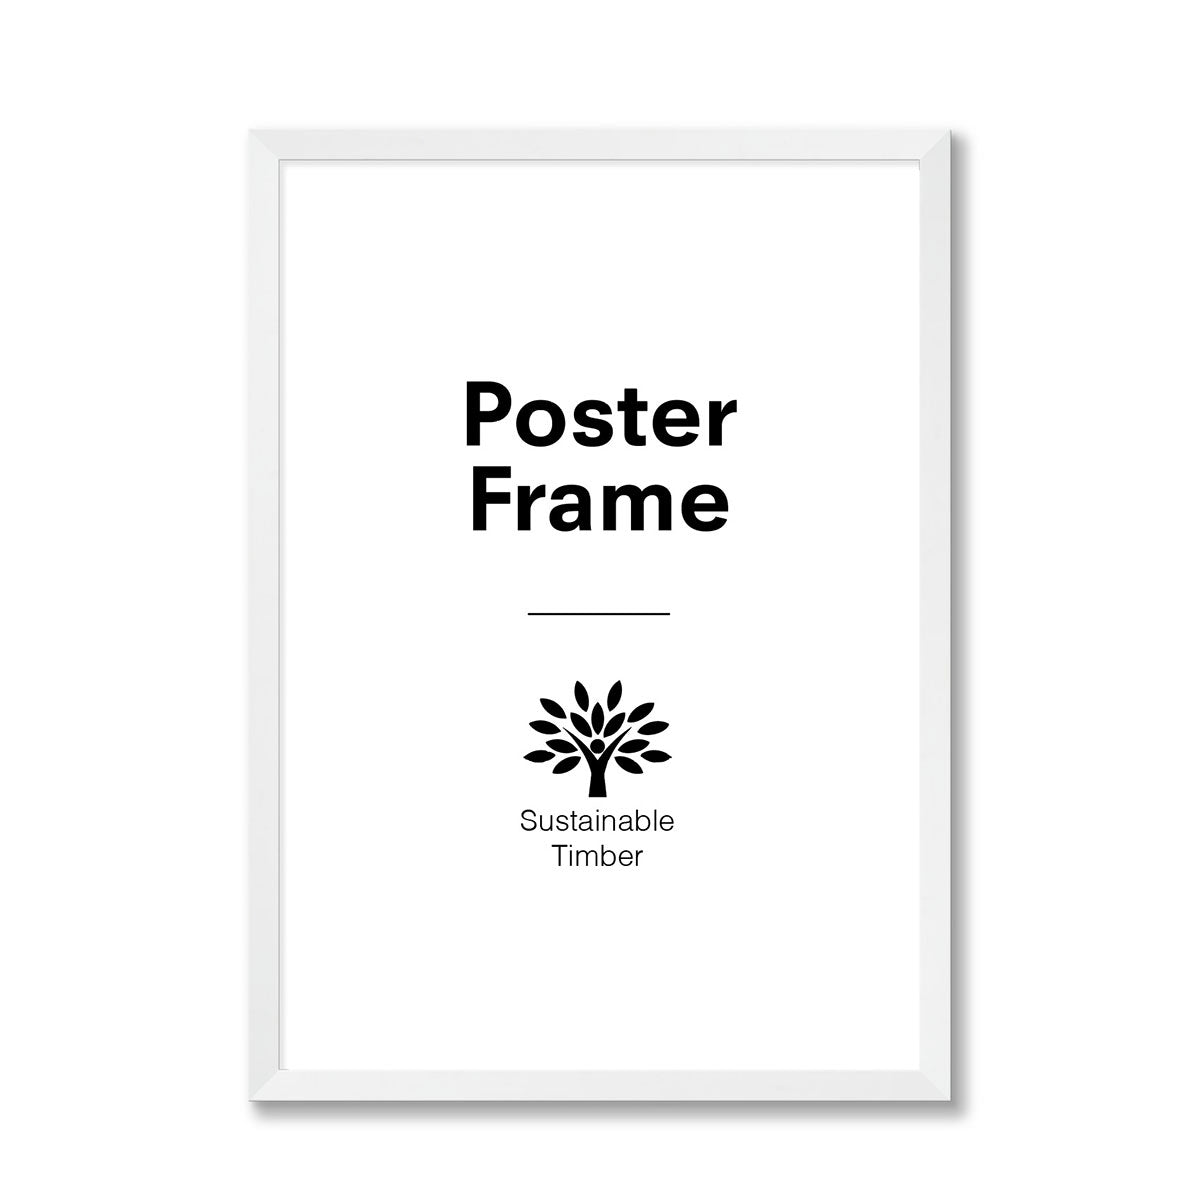 Poster Frame in White Colour